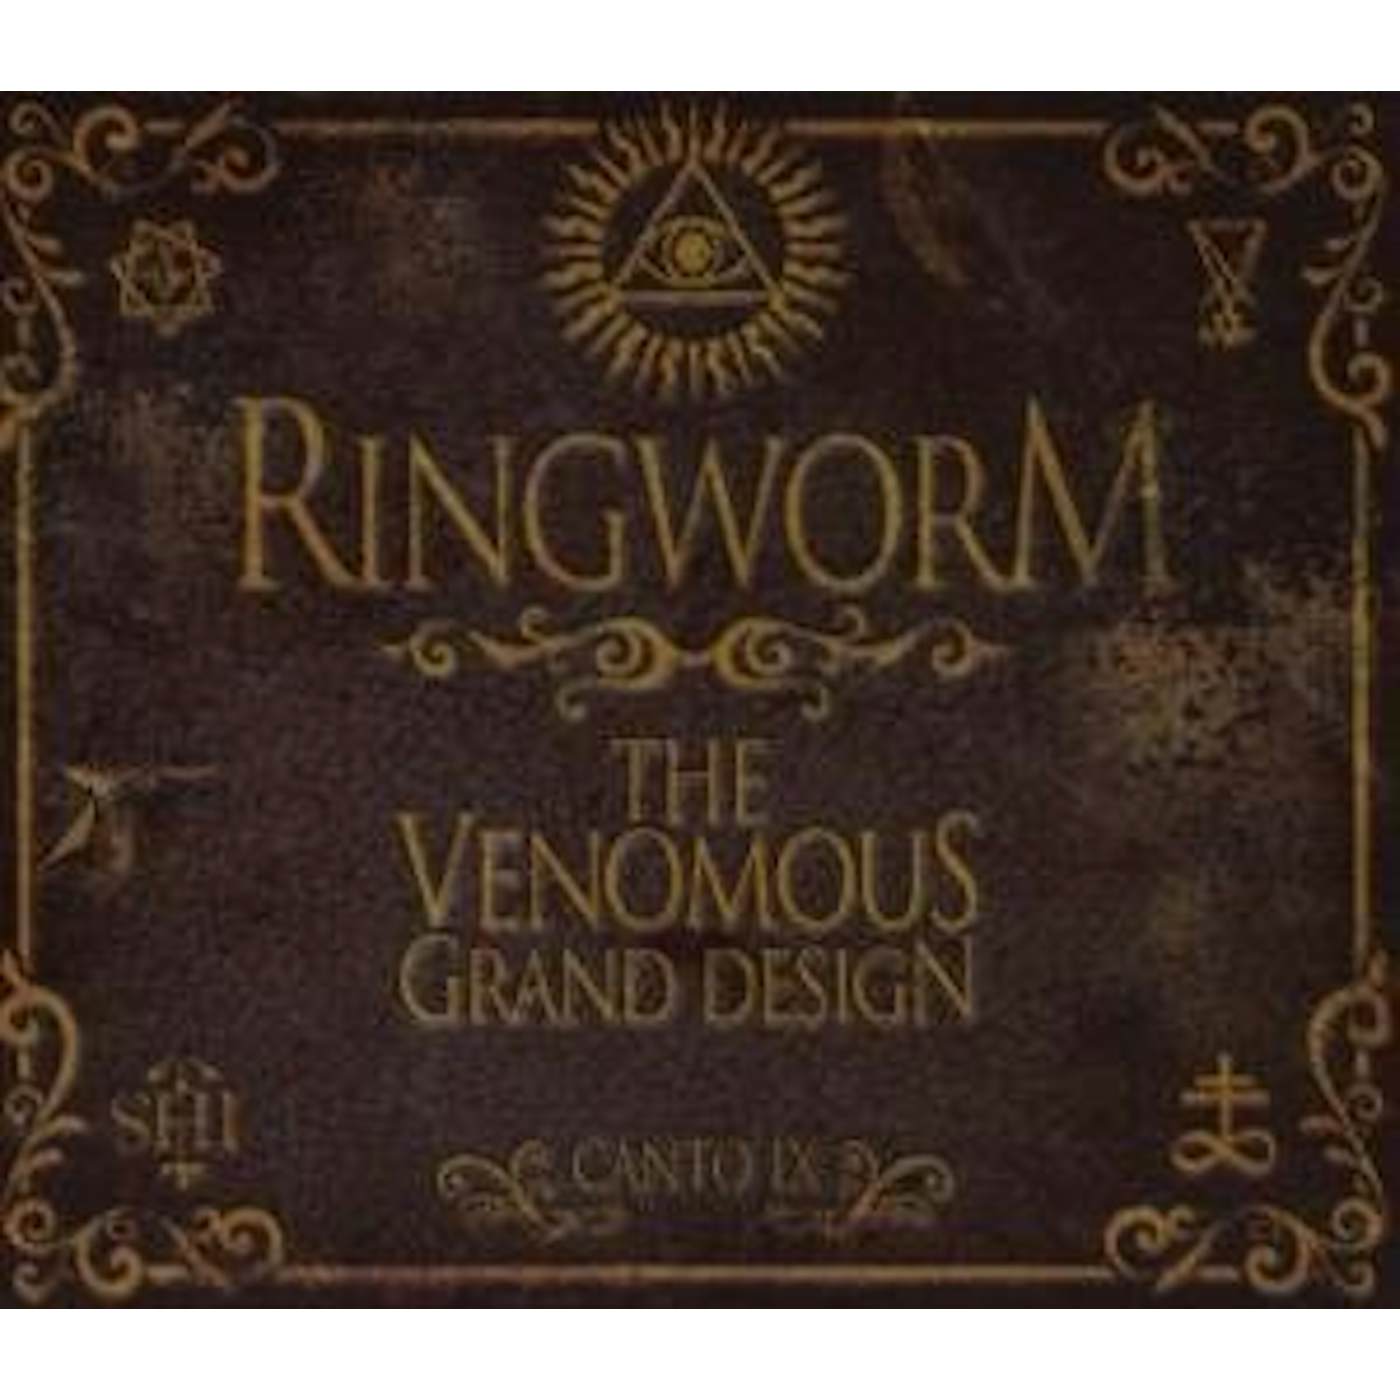 Ringworm VENOMOUS GRAND DESIGN CD